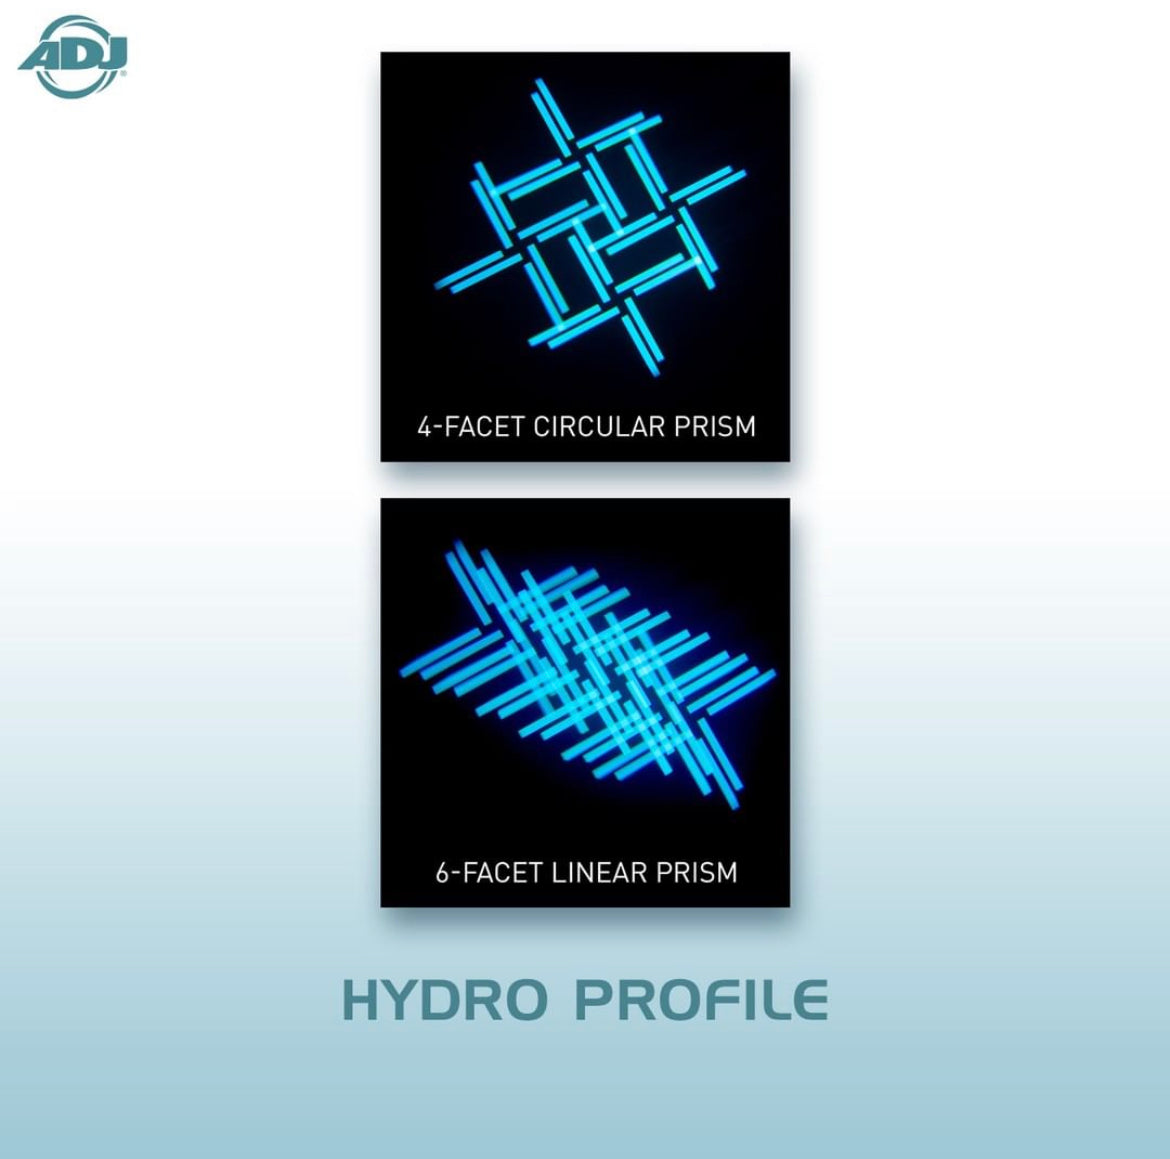 American DJ ADJ Hydro Profile 660-Watt IP65-rated LED Moving Head